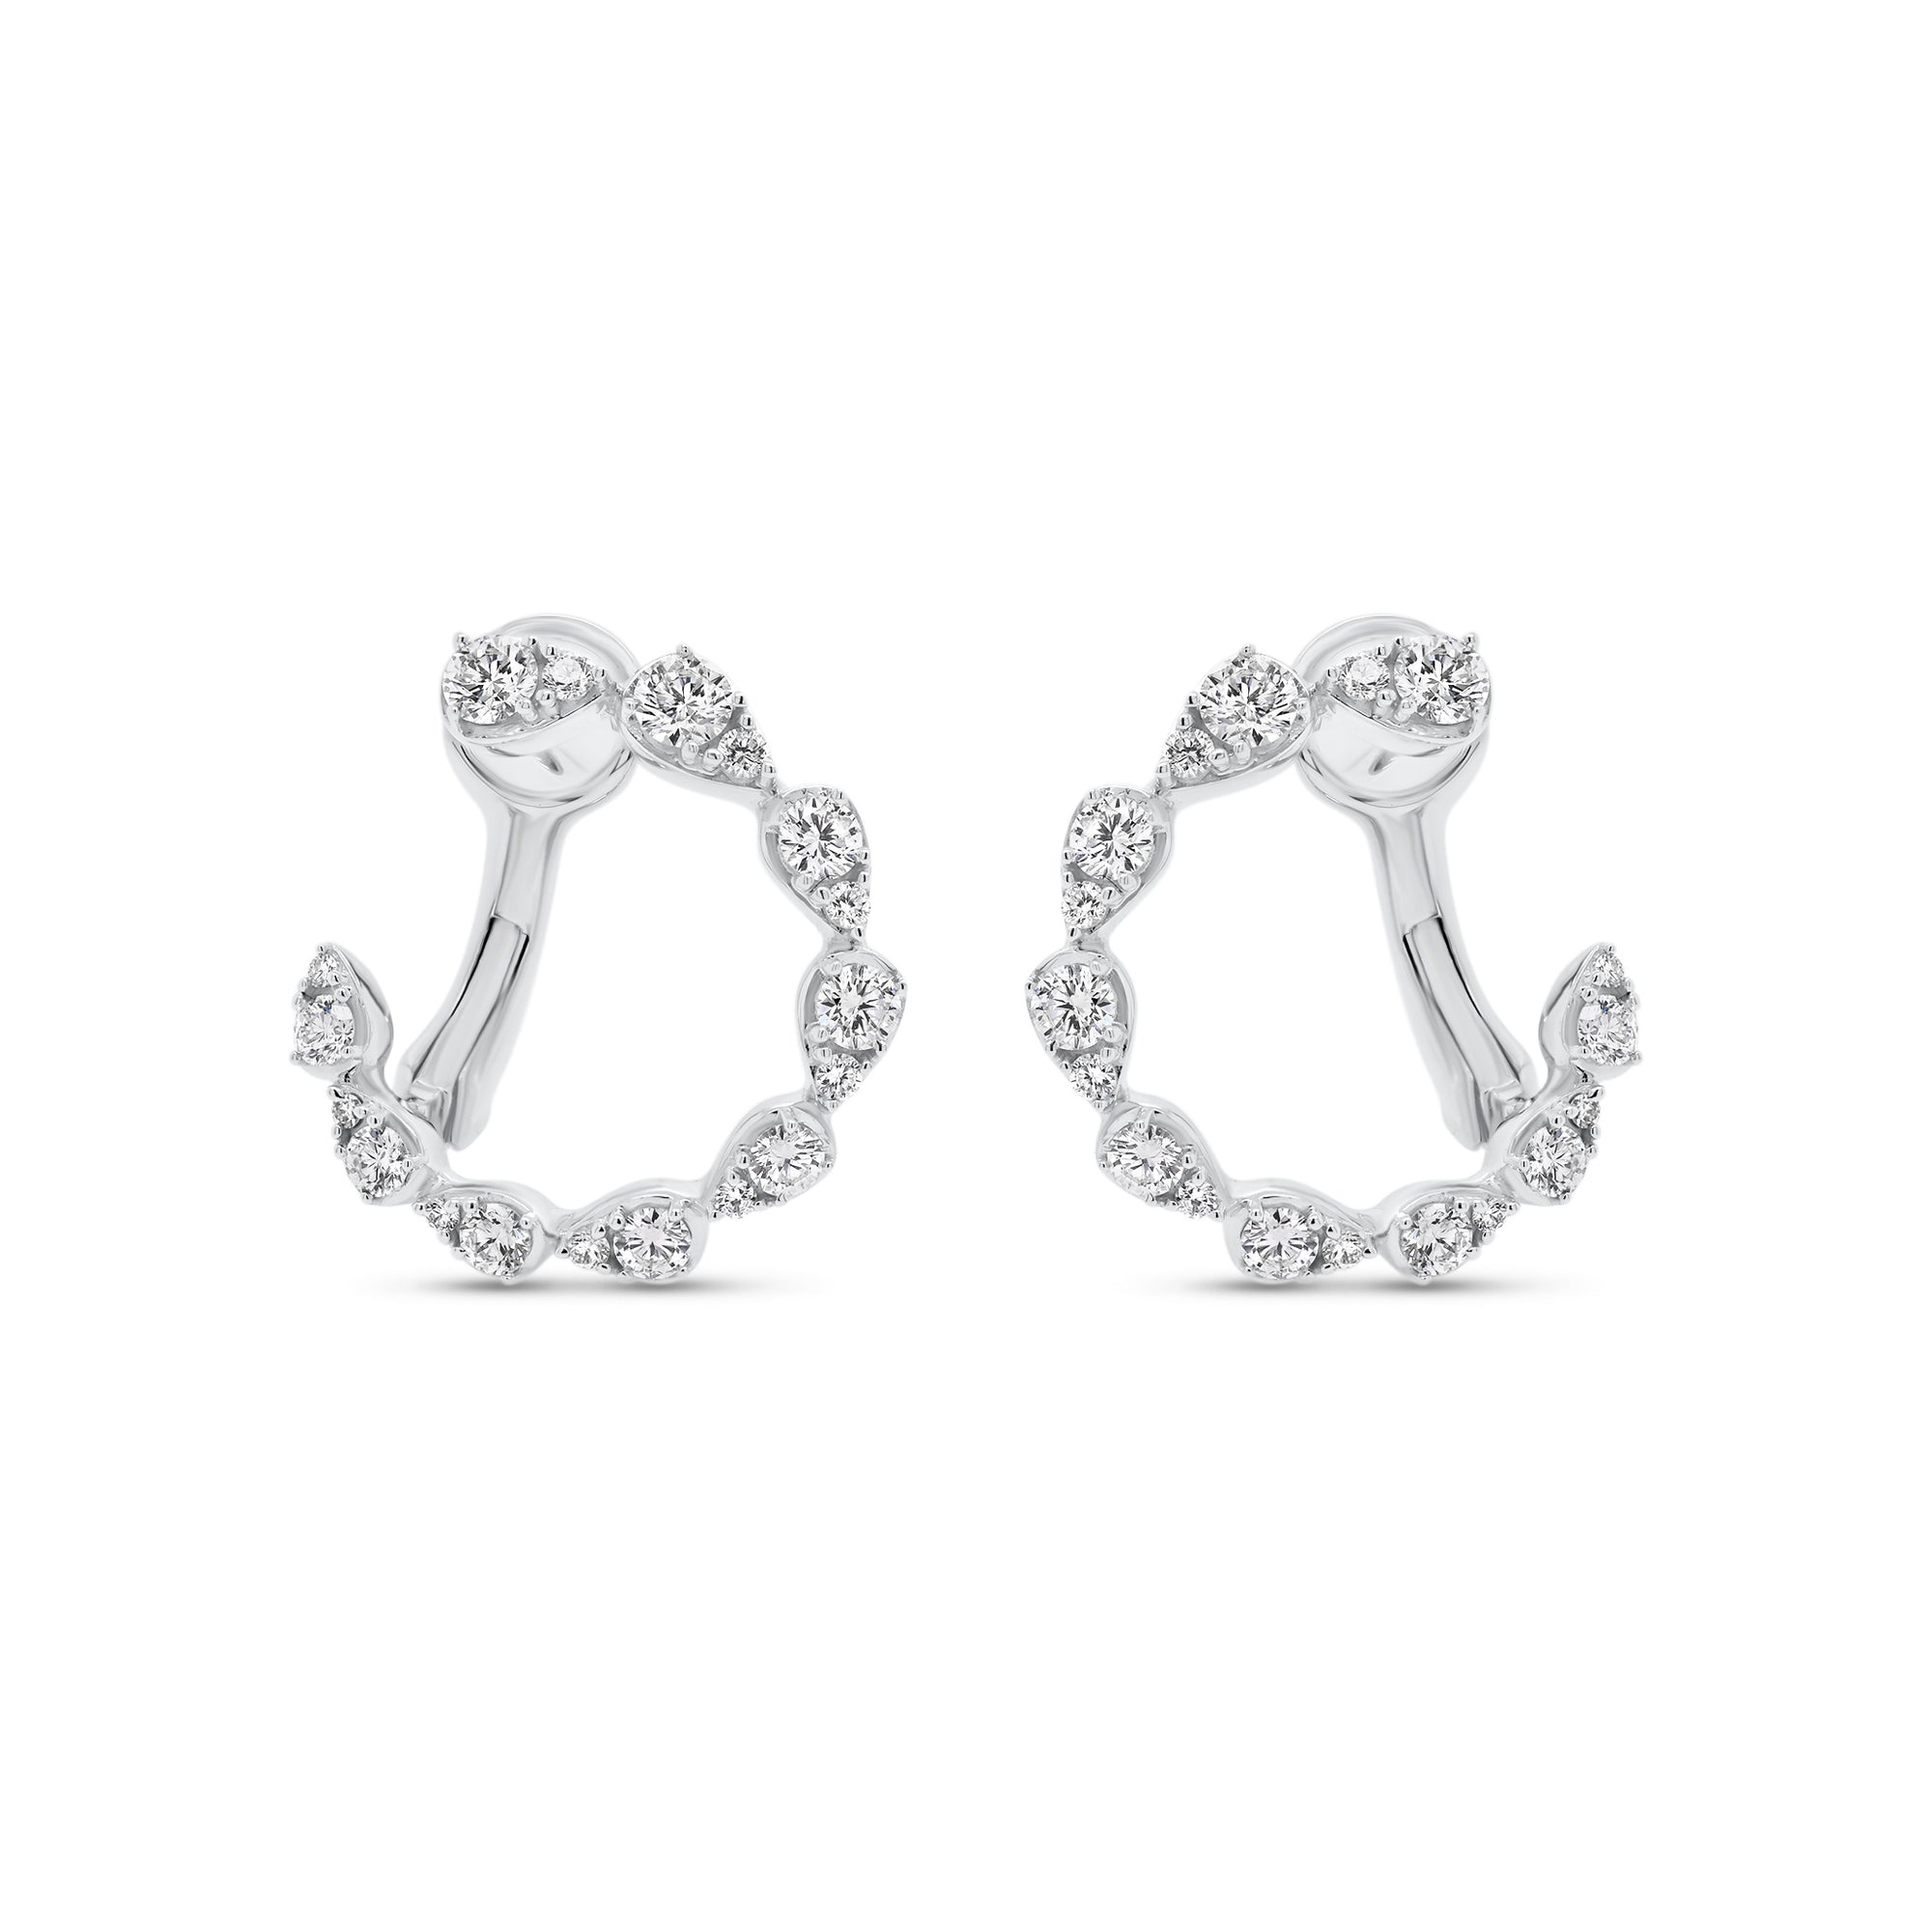 Diamond teardrops front-facing hoop earrings - 14K white gold weighing 3.76 grams  - 8 round diamonds totaling 0.38 carats  - 28 round diamonds totaling 0.36 carats